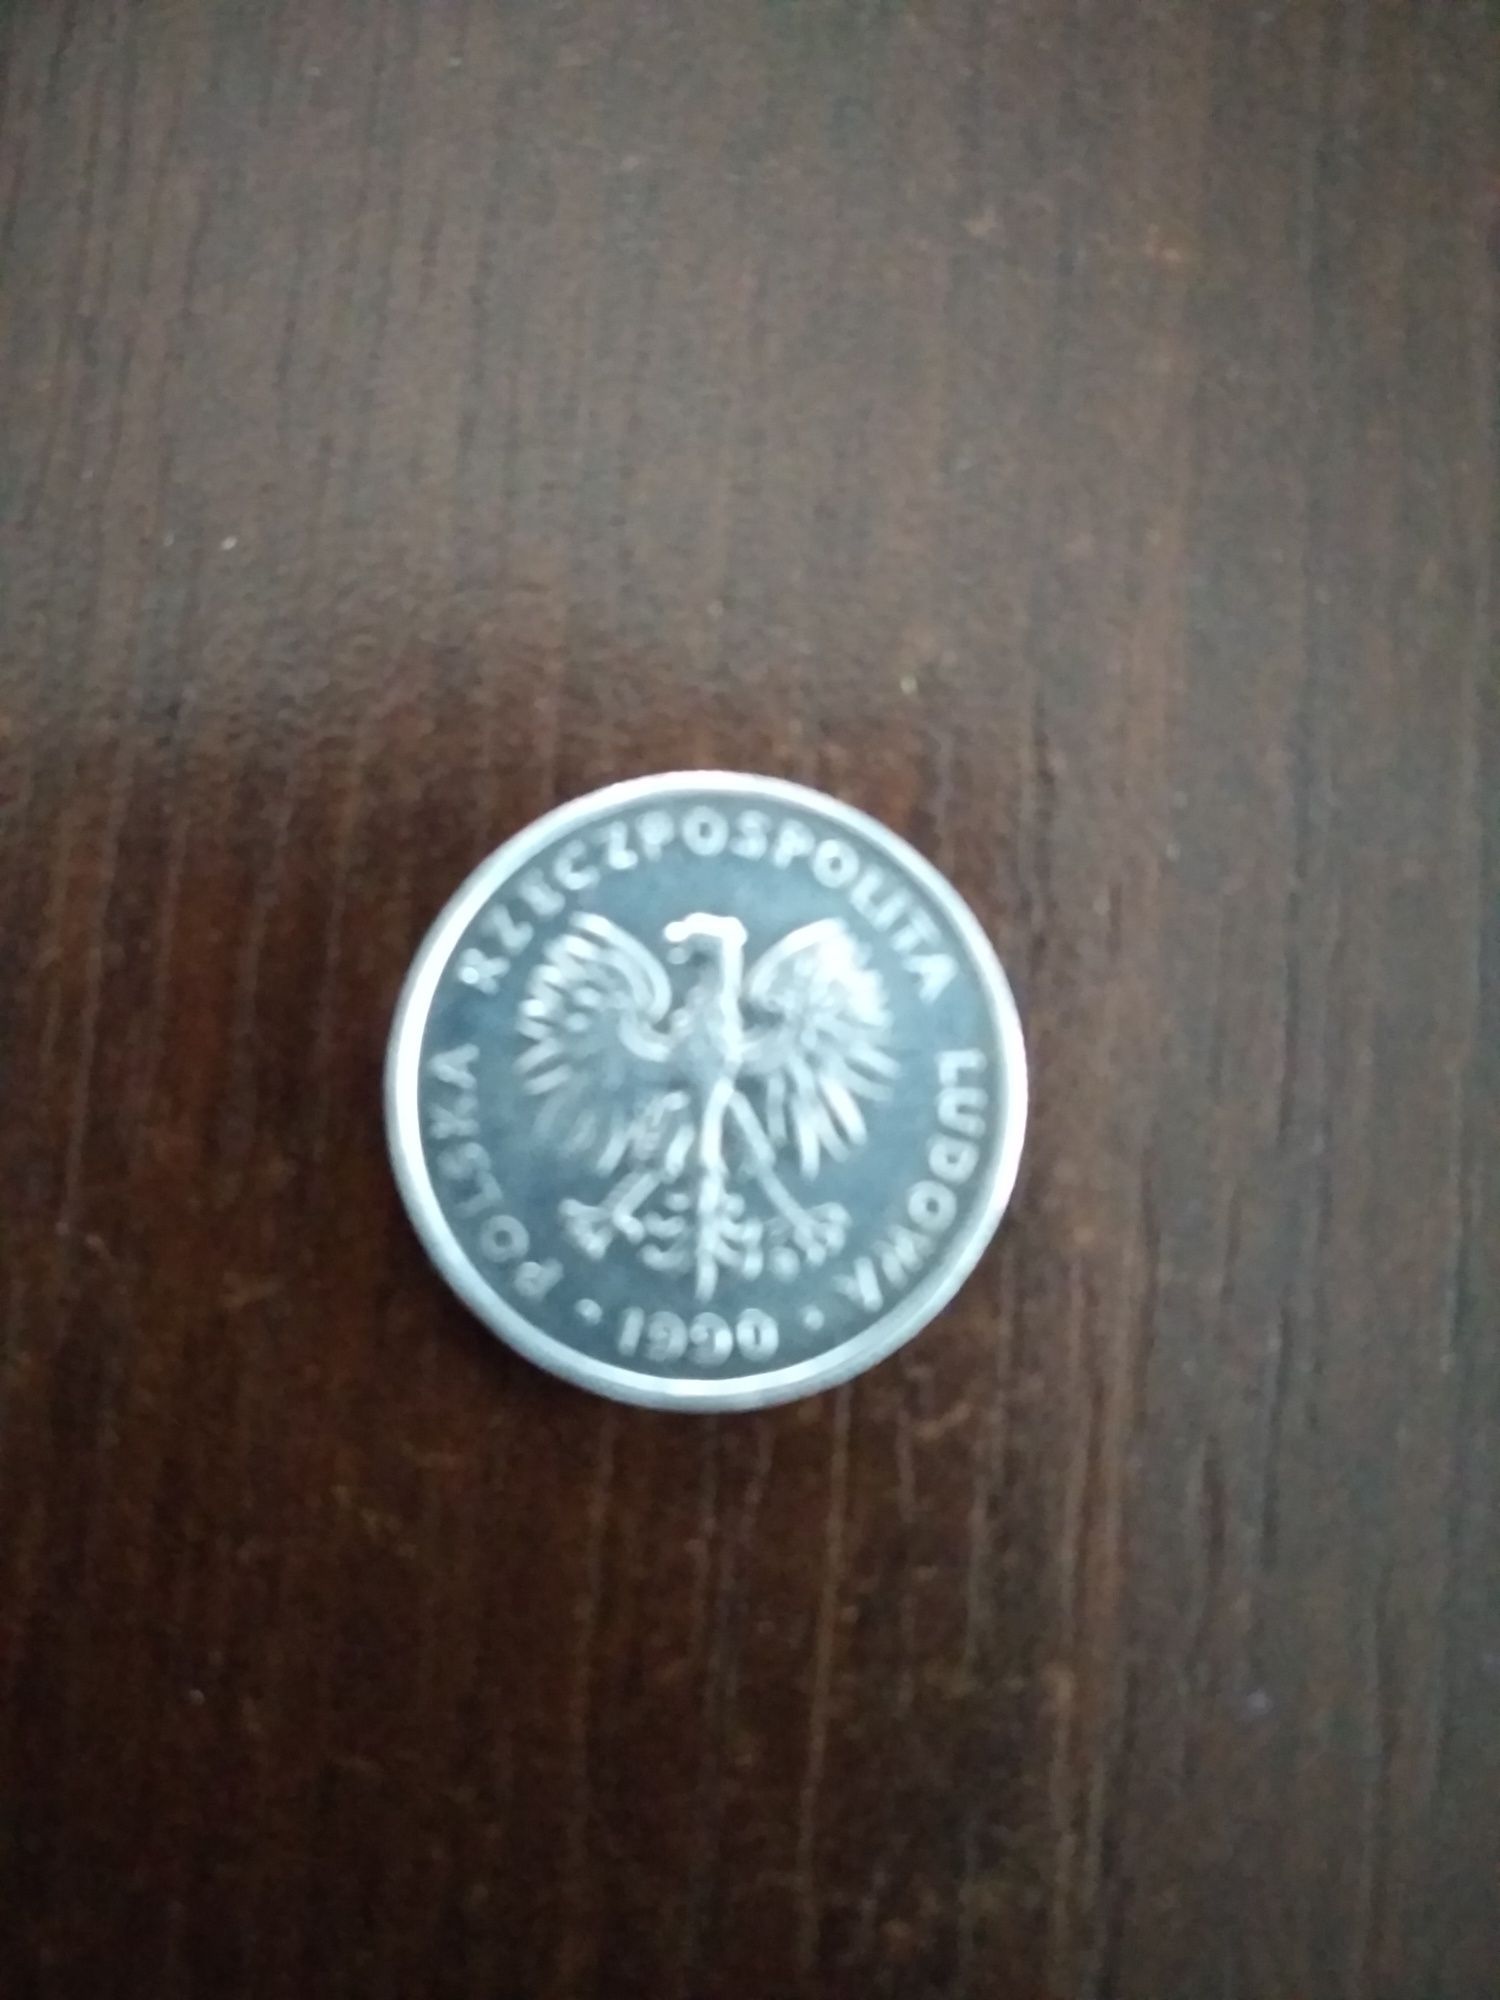 Moneta 5zł z 1990r